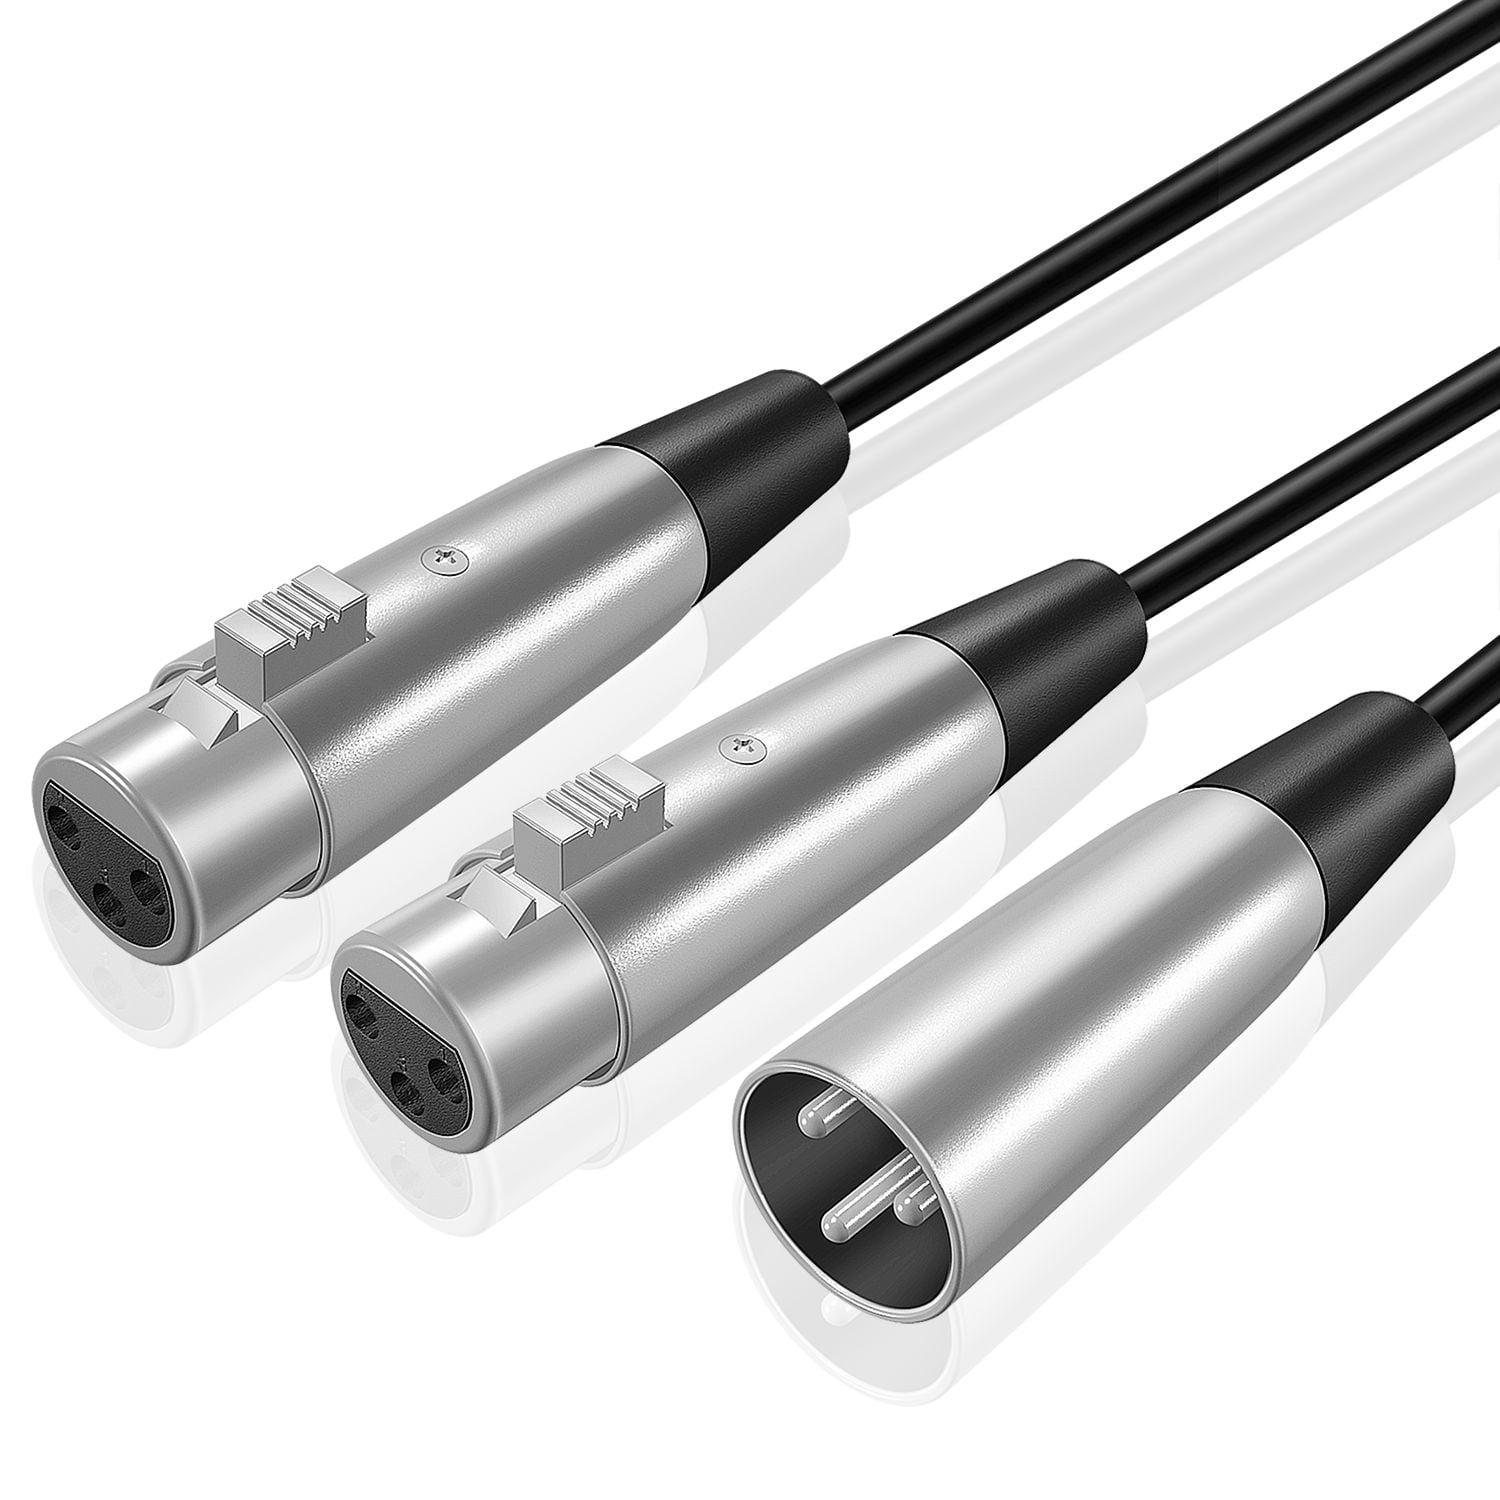 McIntosh Balanced Male XLR to Female XLR Cable - 3.28 ft. (1m)